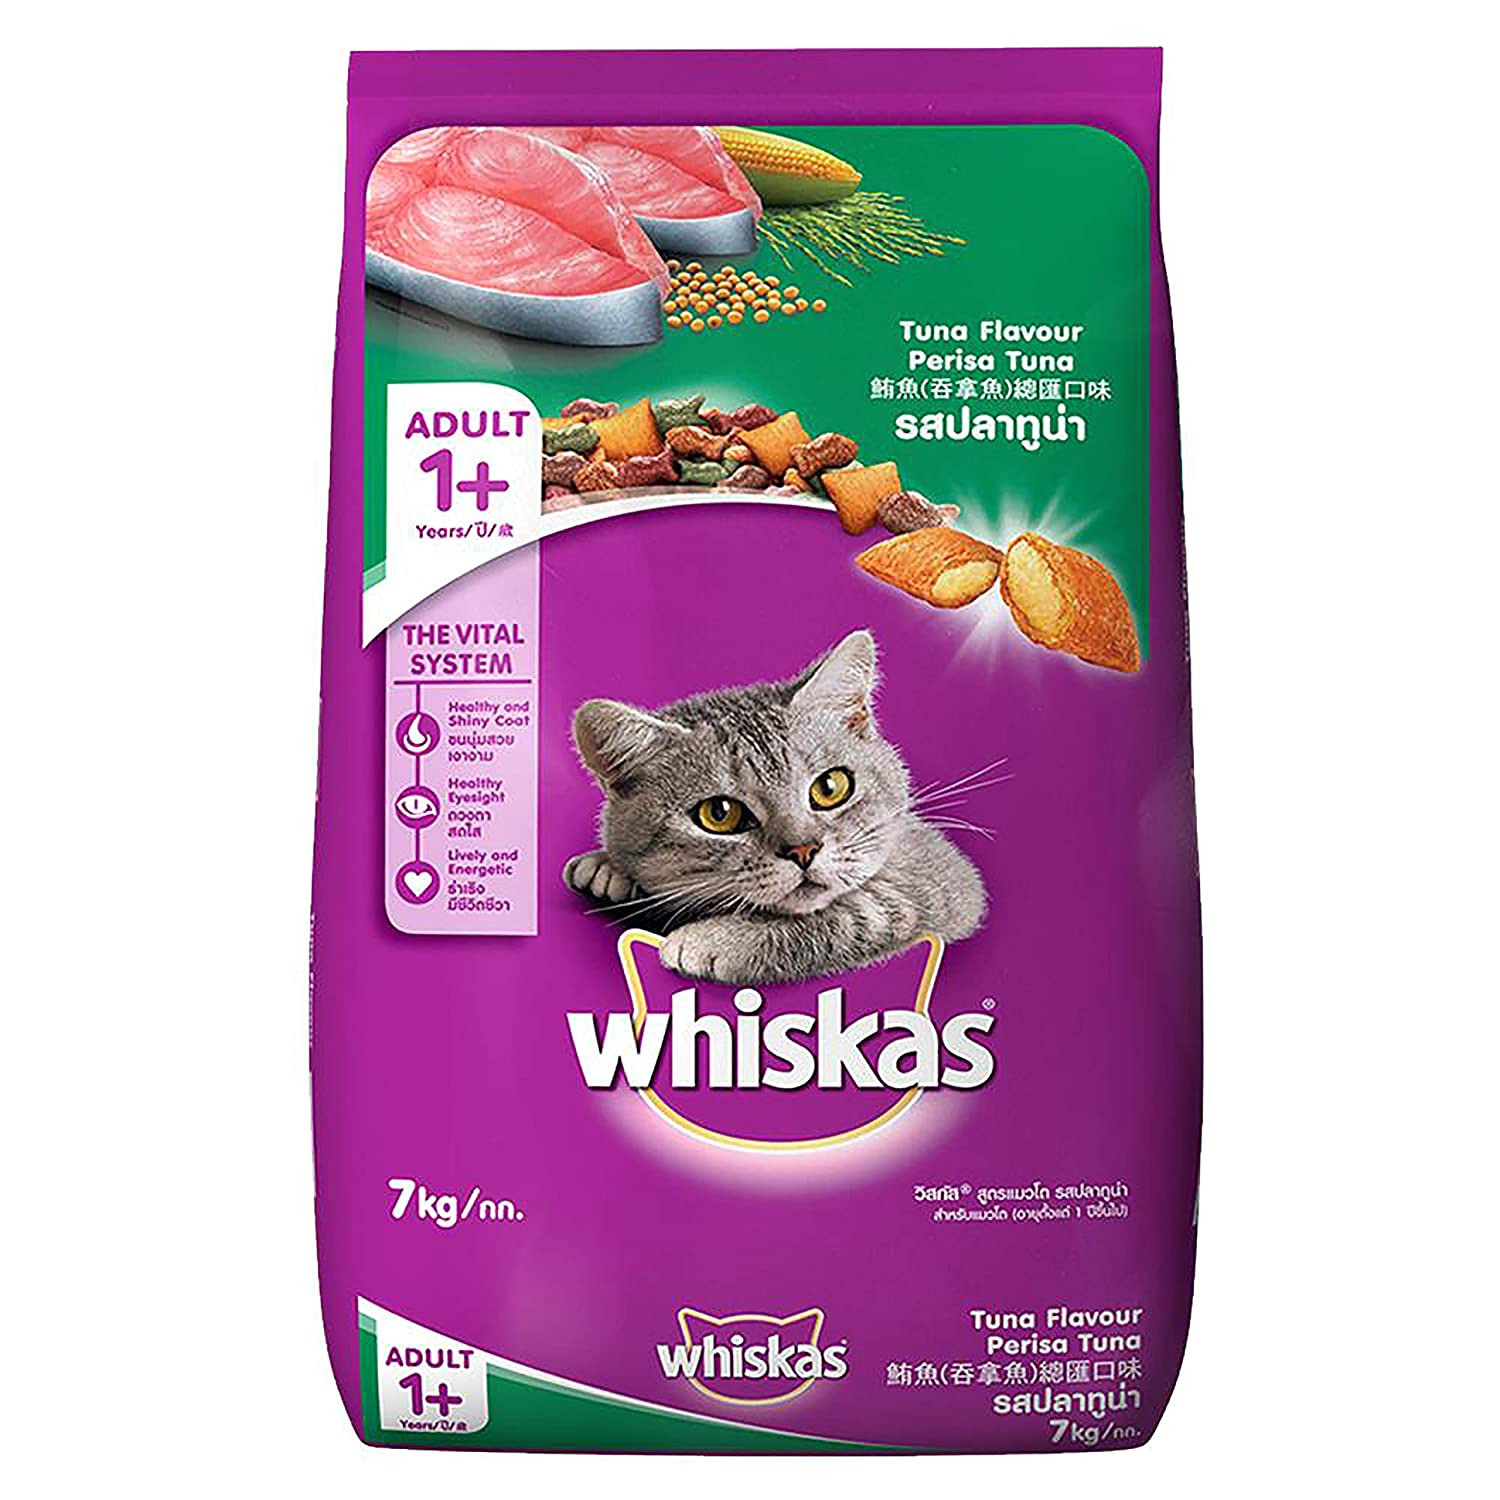 Whiskas Tuna Adult - Petzzing